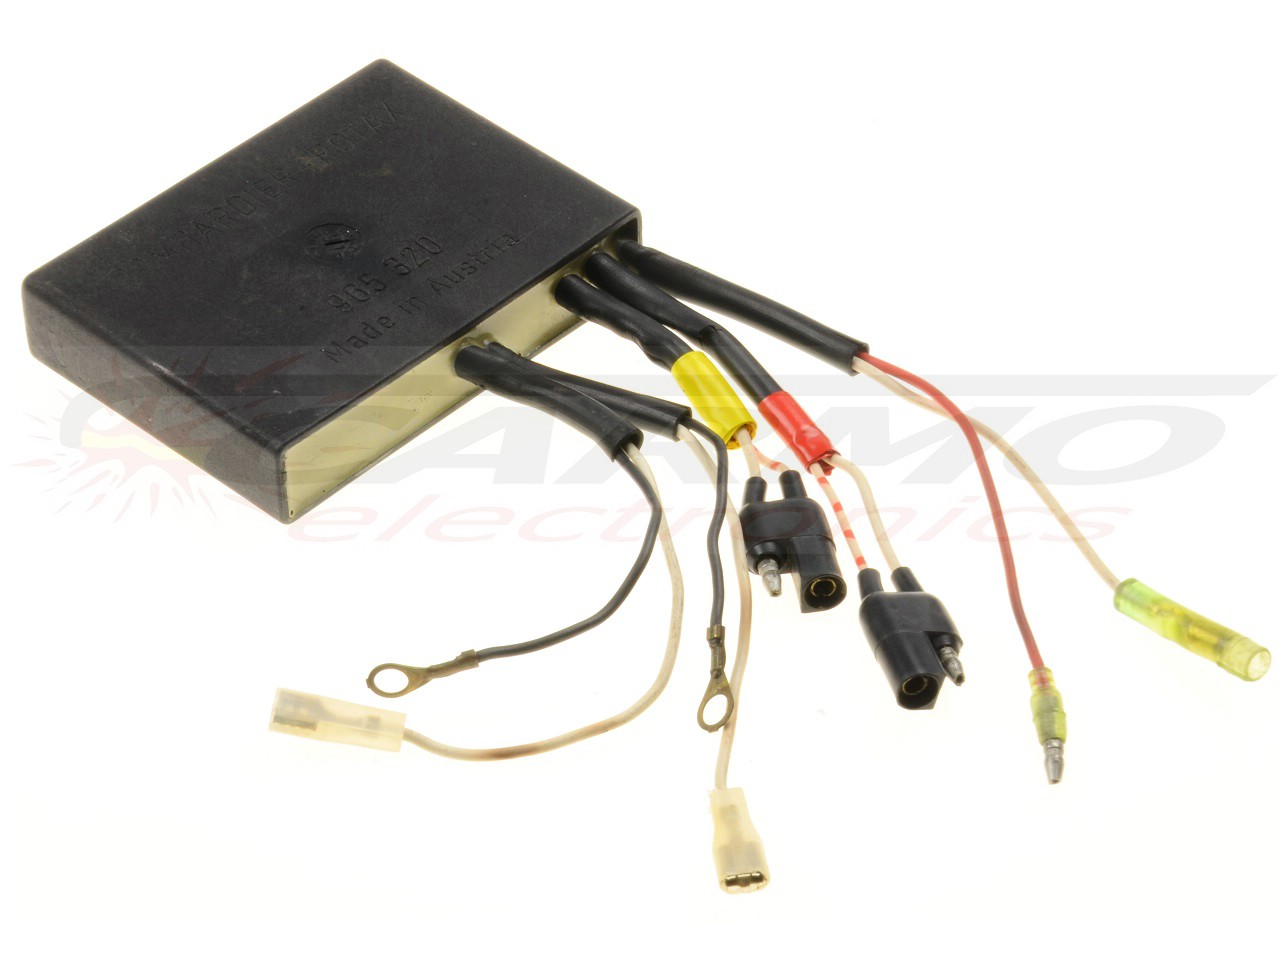 Rotax 912A 912UL electronic box SMD module igniter ignition module CDI Box bombardier (965 320, 912 060 PKT)